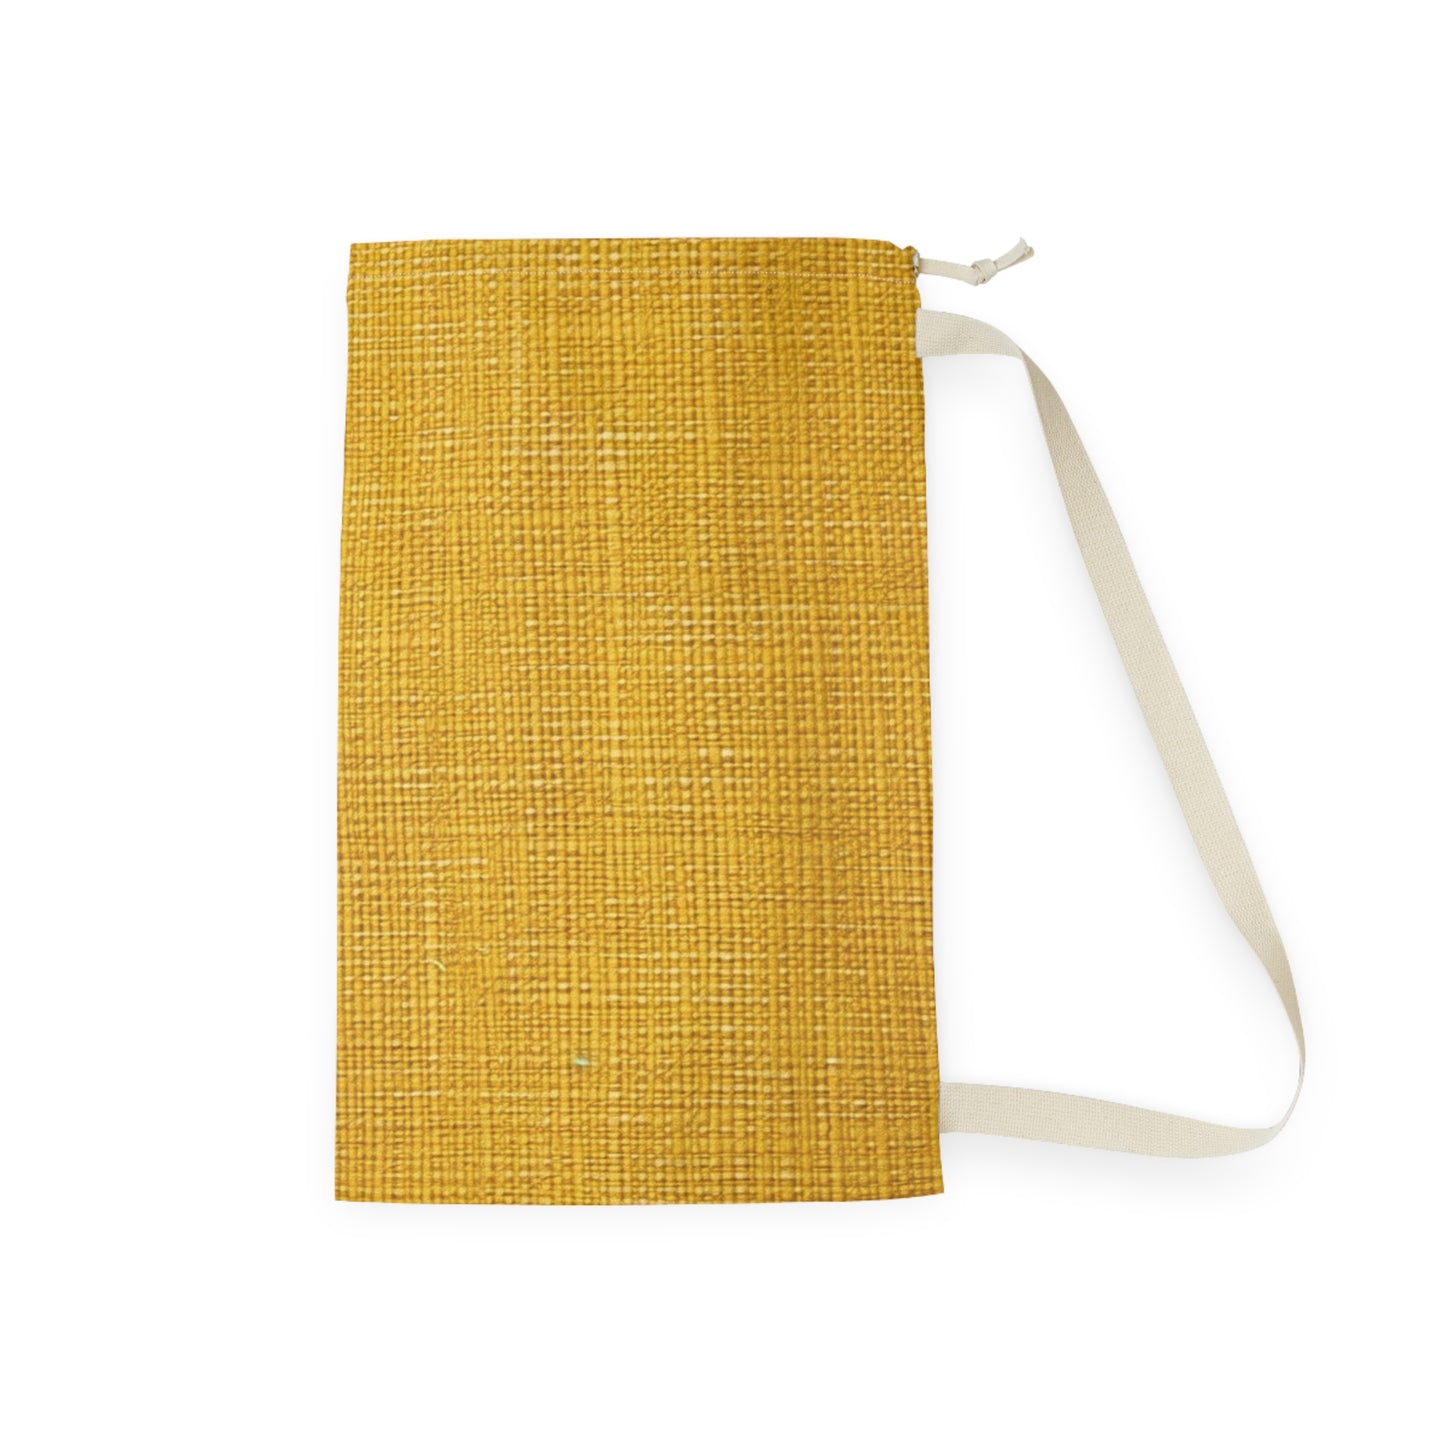 Radiant Sunny Yellow: Denim-Inspired Summer Fabric - Laundry Bag